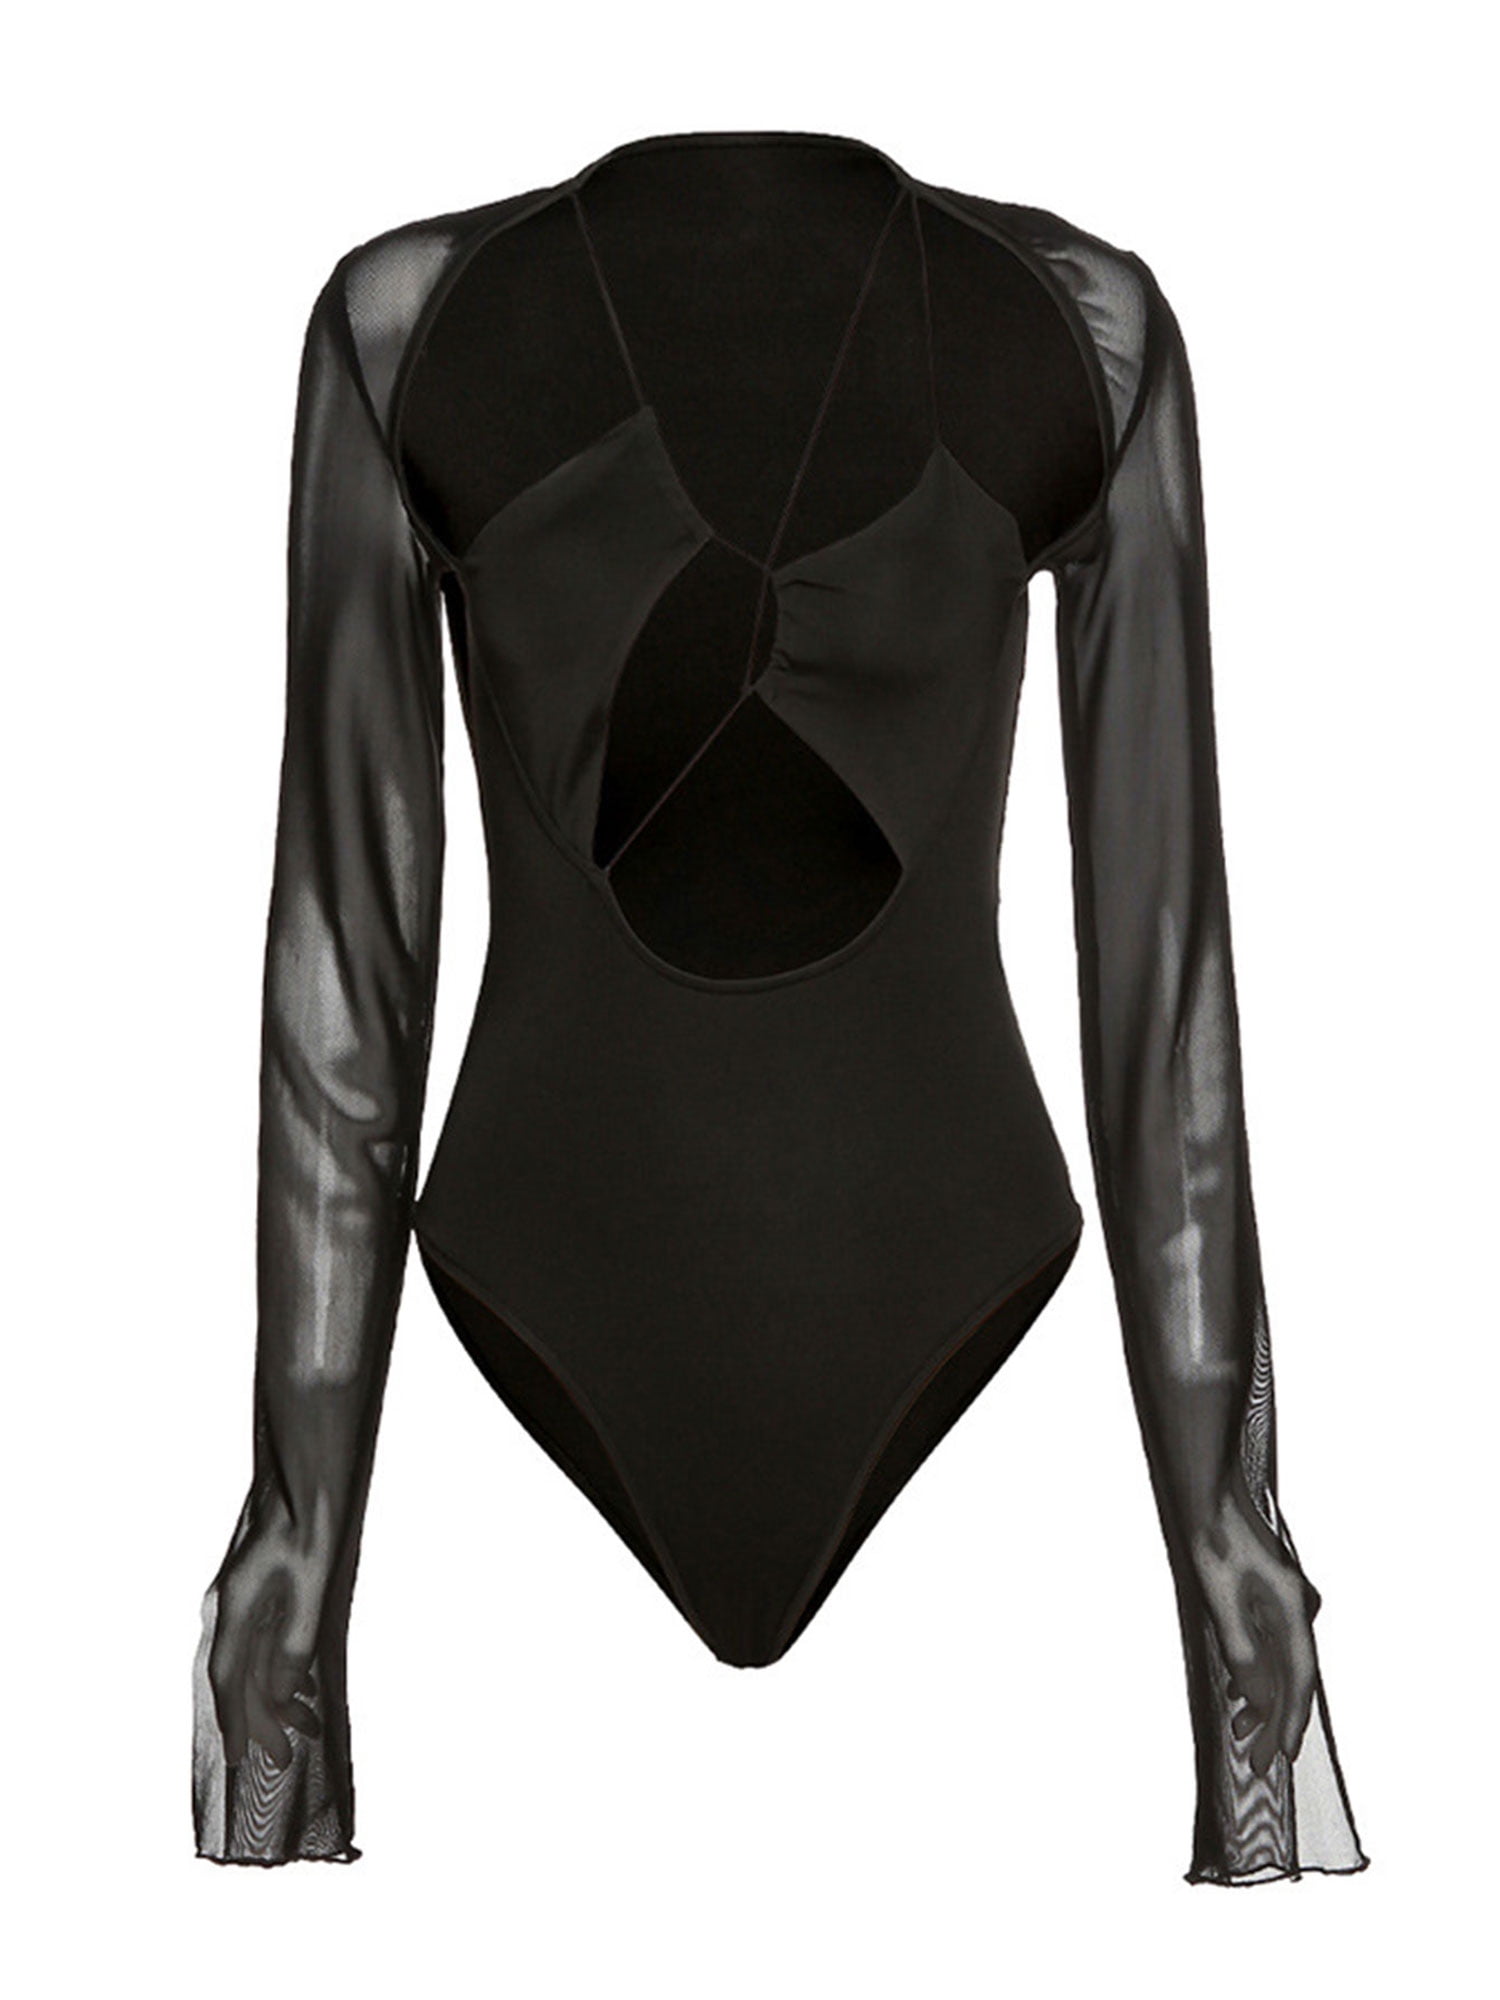 wybzd Women Hollow Out Triangle Bodysuit Mesh Sheer Patchwork Bandage Low  Cut Jumpsuits Romper Top Streetwear Black 